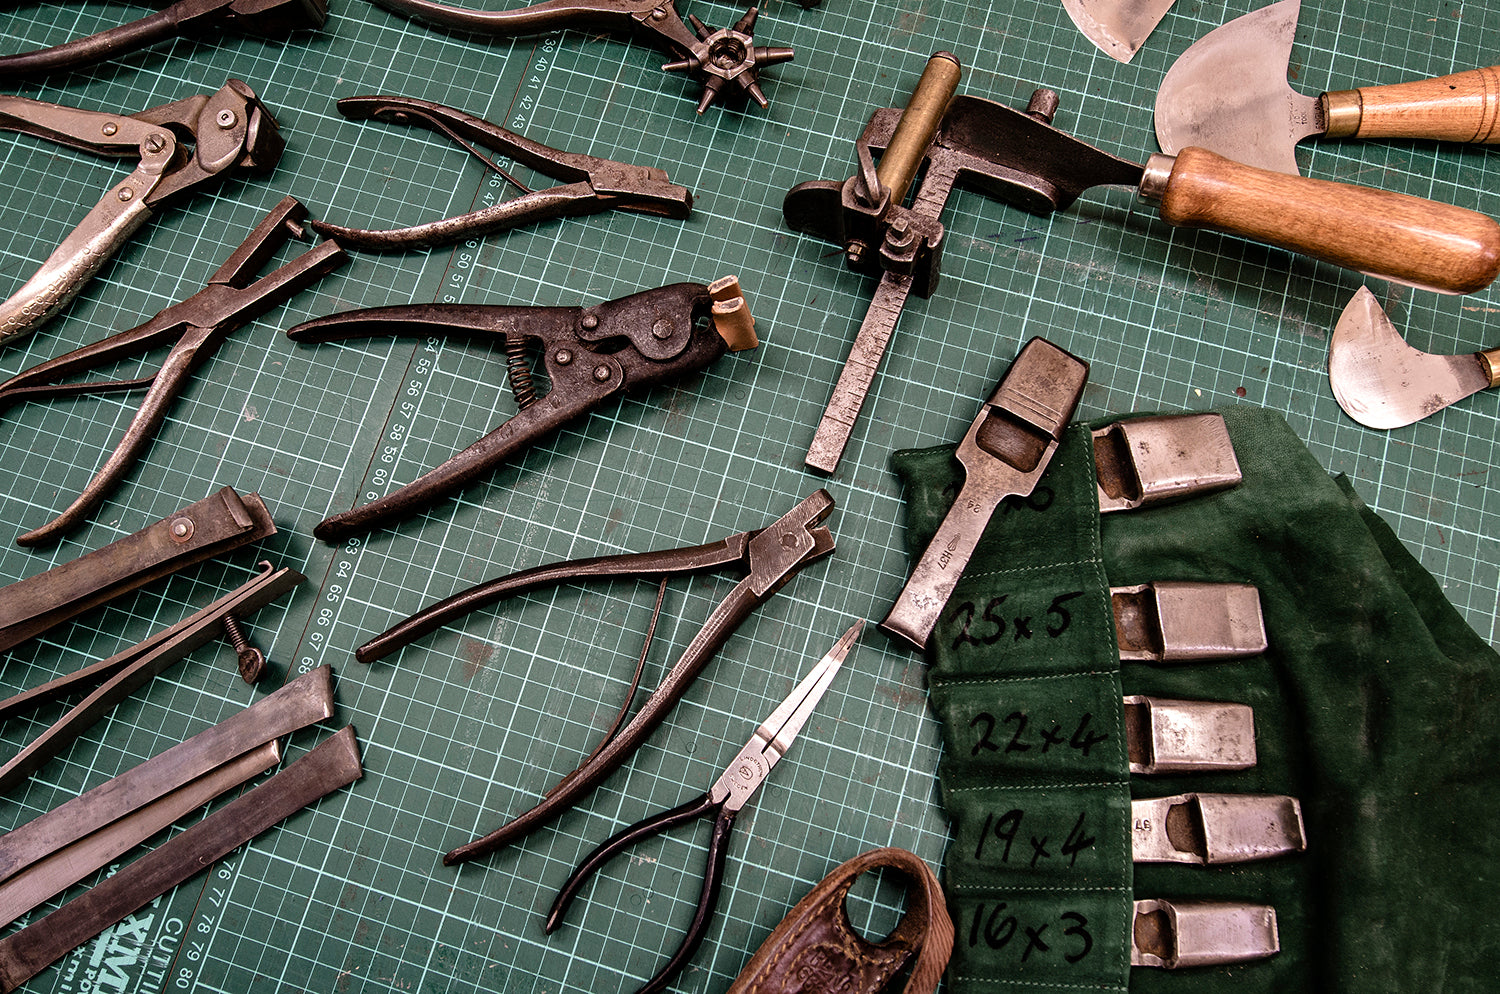 Workshop leather tools